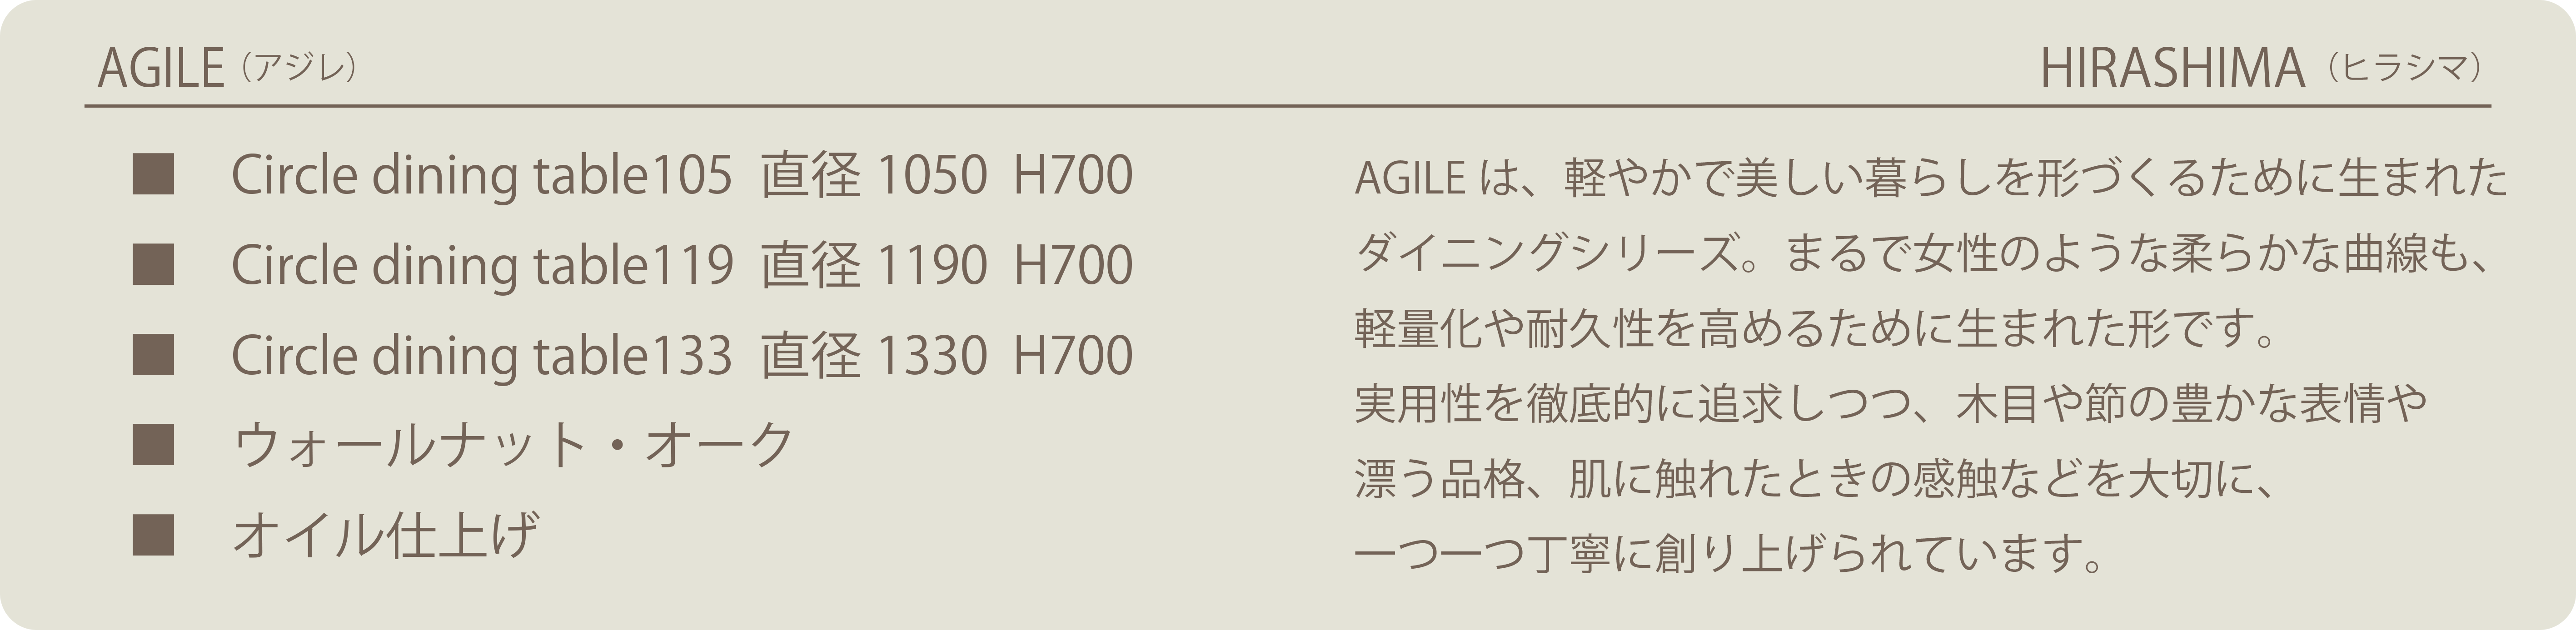 agilecircledainingtable hirashima AGILE HIRASHIMA